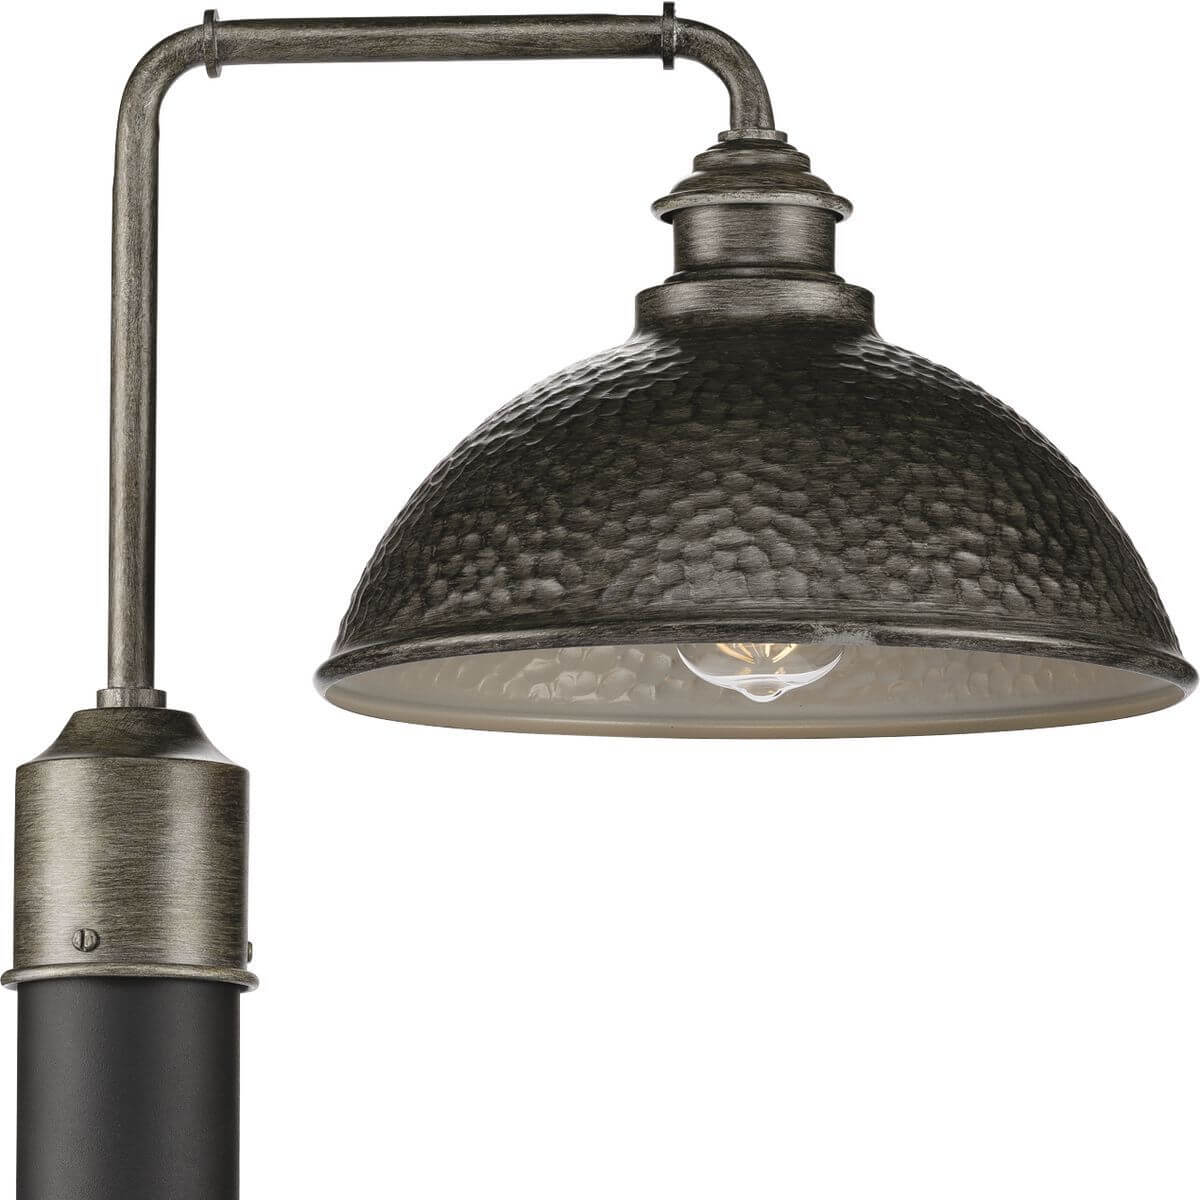 Progress Lighting Englewood 1 Light 13 inch Tall Outdoor Post Lantern in Antique Pewter P540032-103